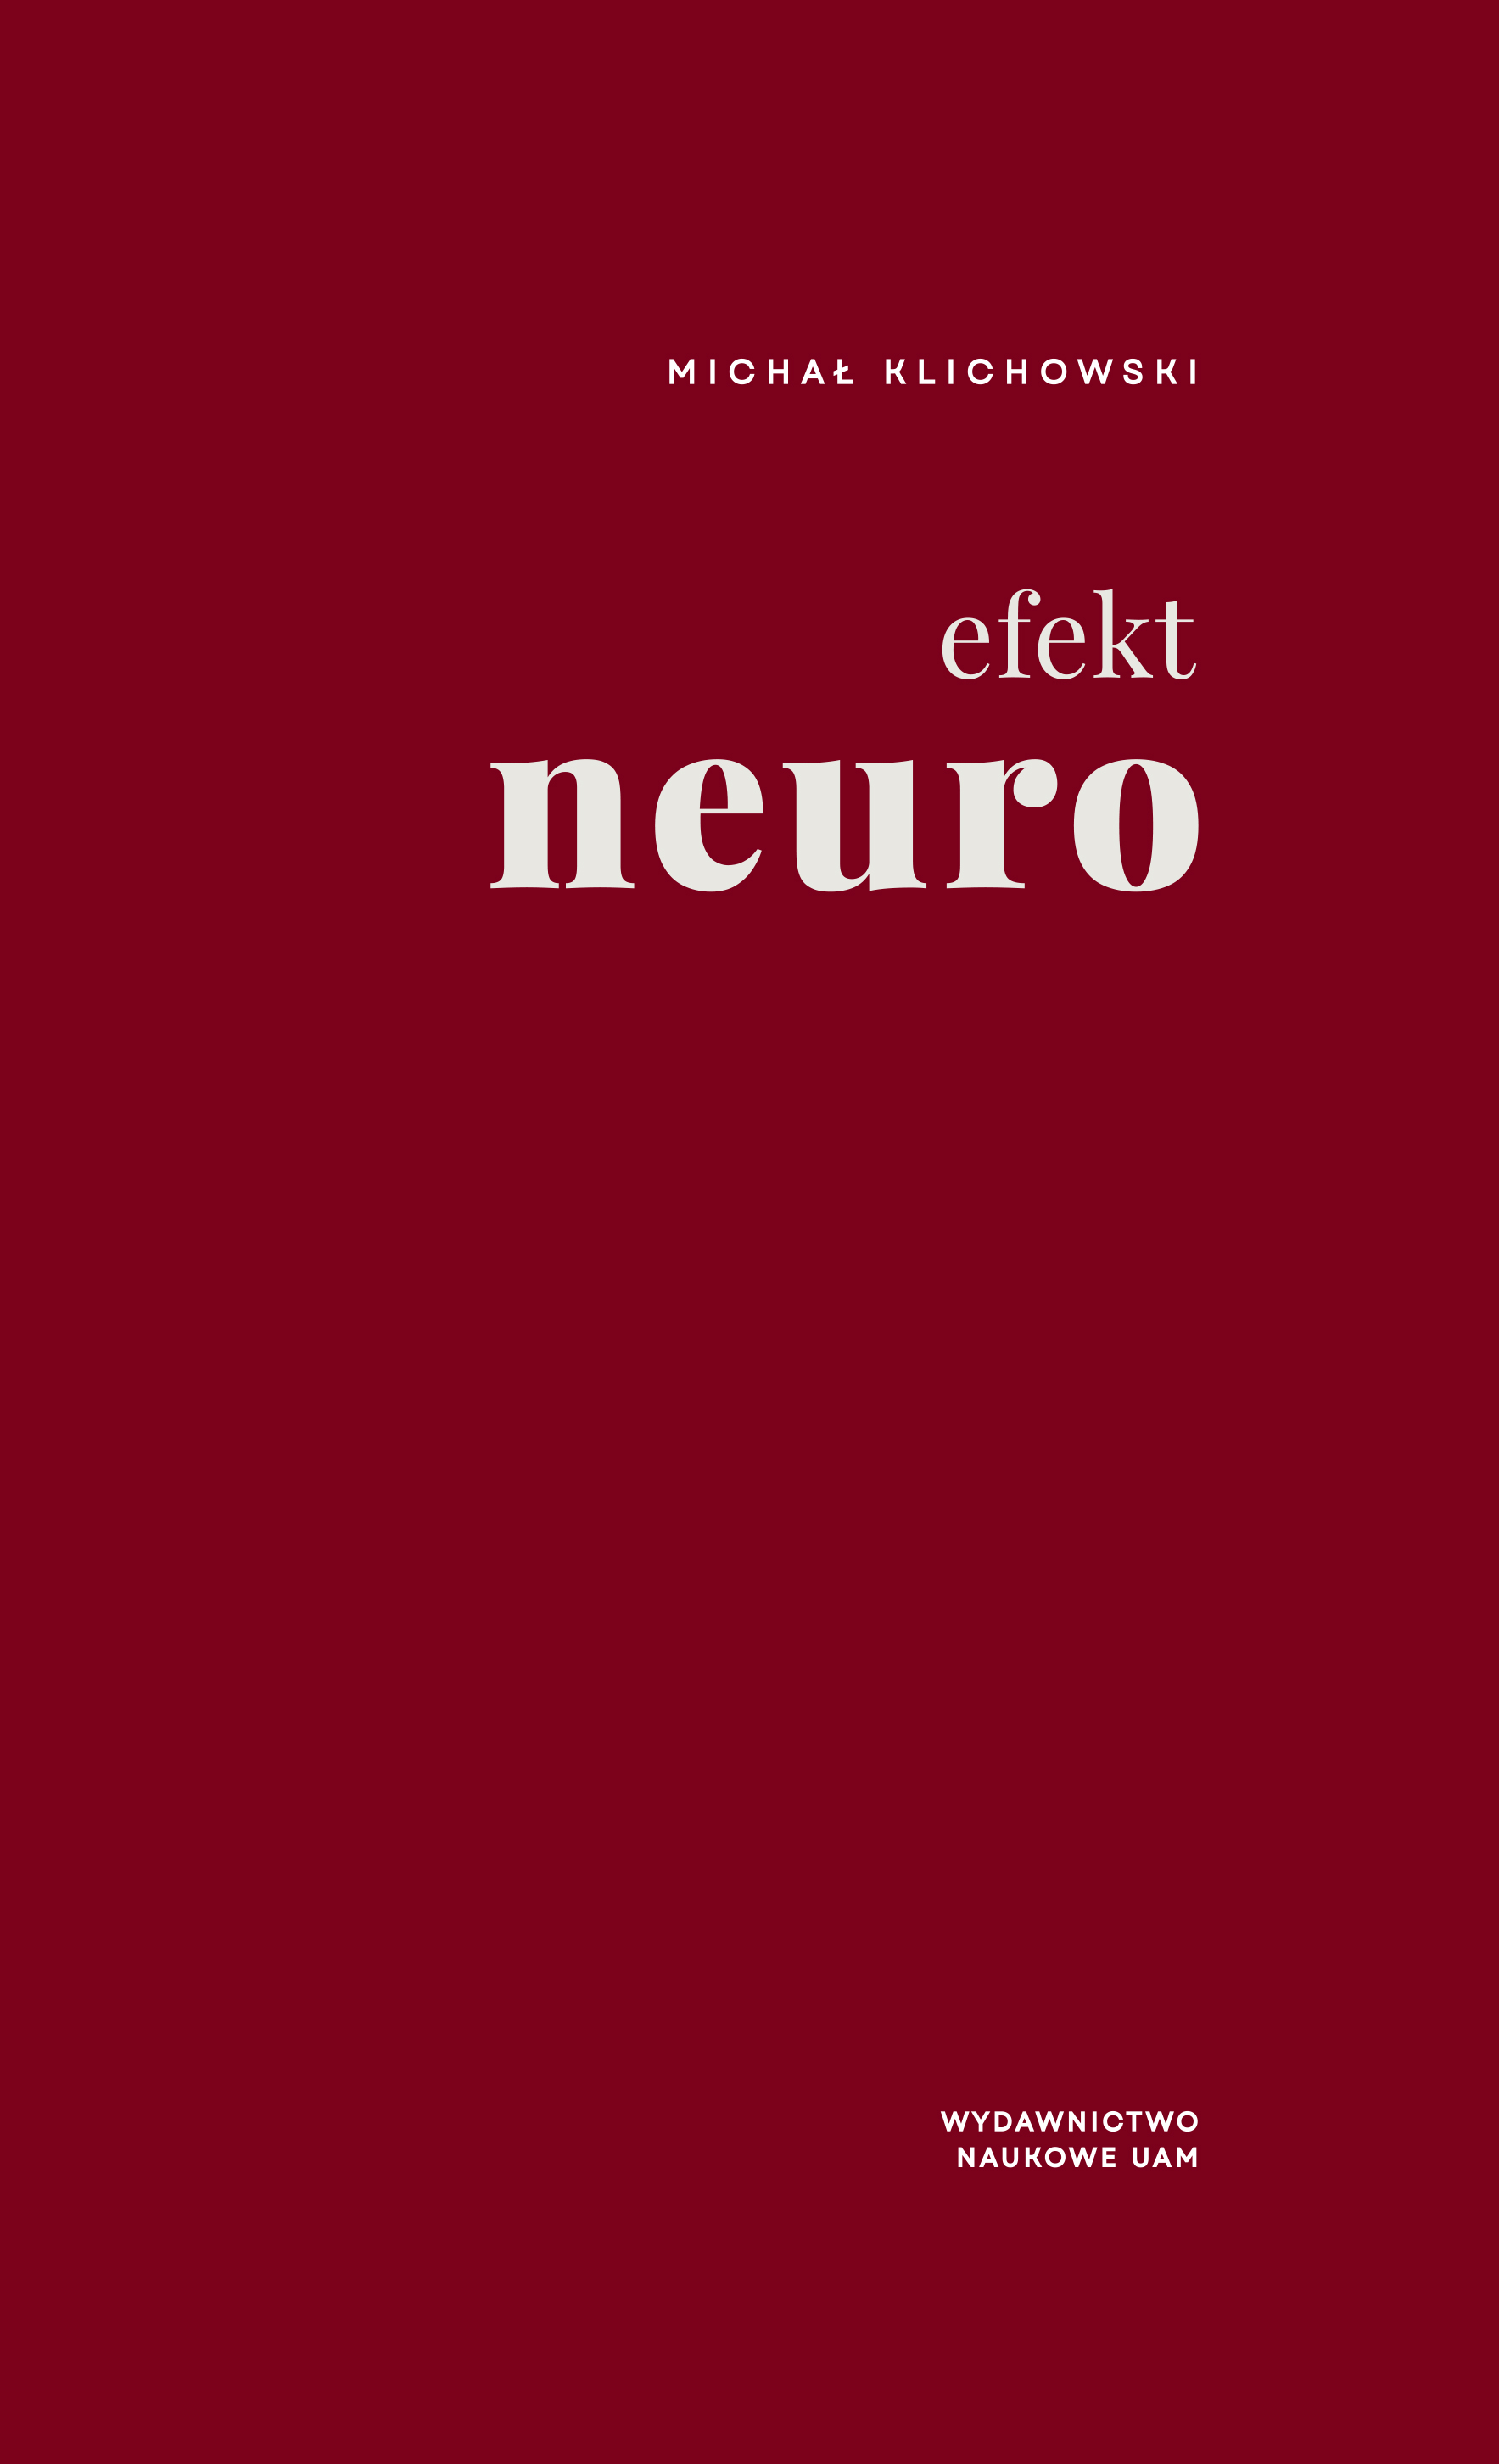 Neuro effect